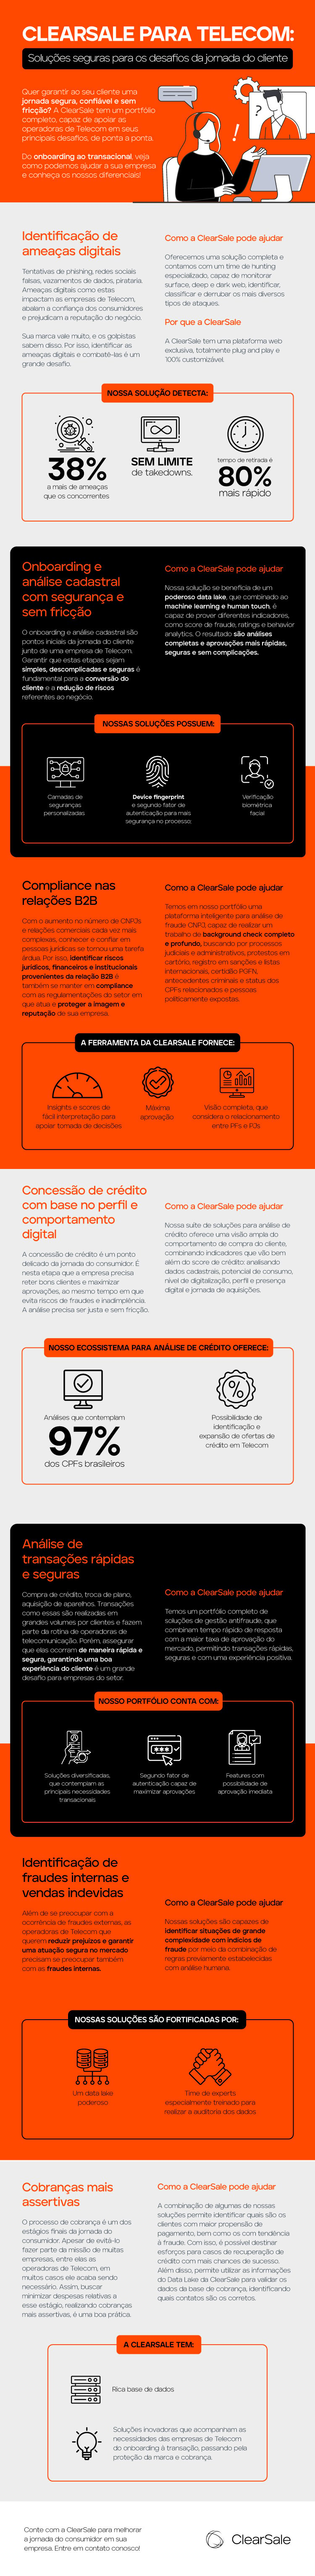 ClearSale-para-Telecom (1)